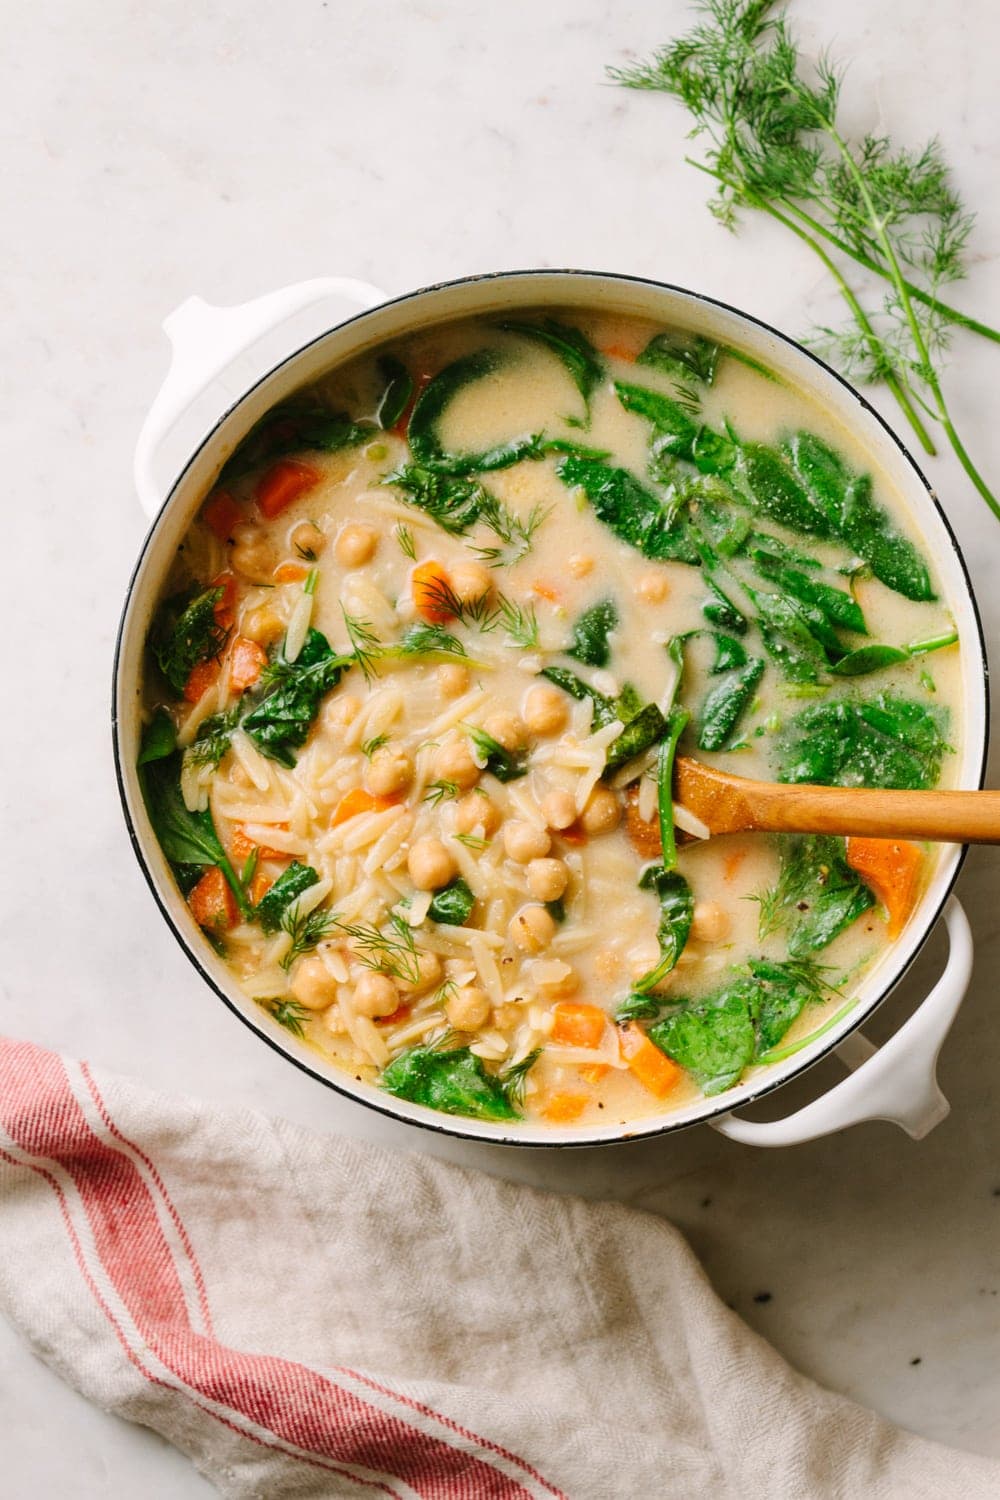 Easy To Make Vegetarian Soup Recipes | Vegetarian Recipes